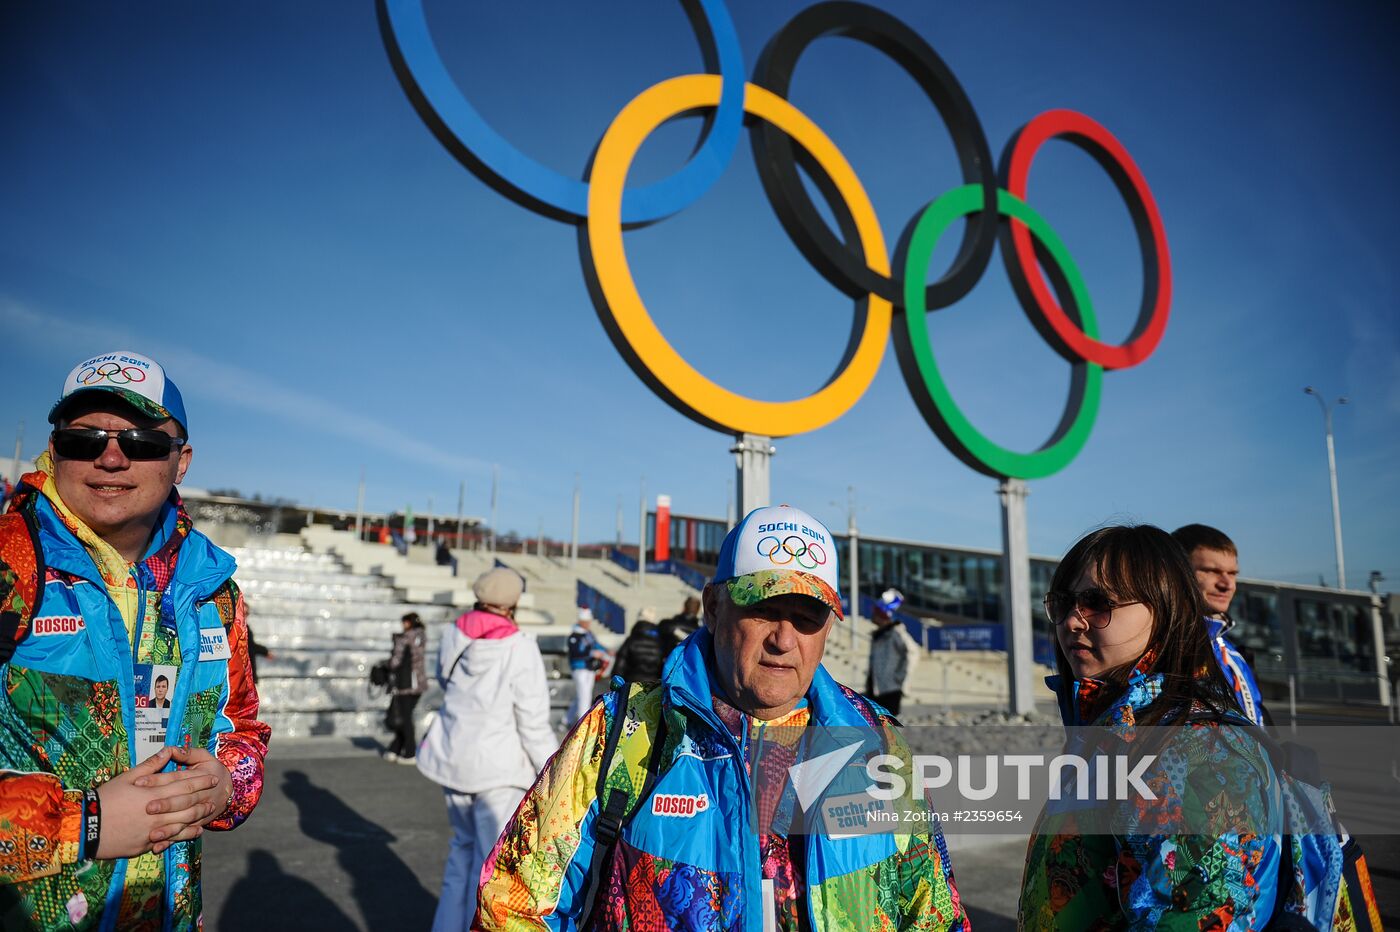 2014 Winter Olympics. Volunteers in Olympic Park